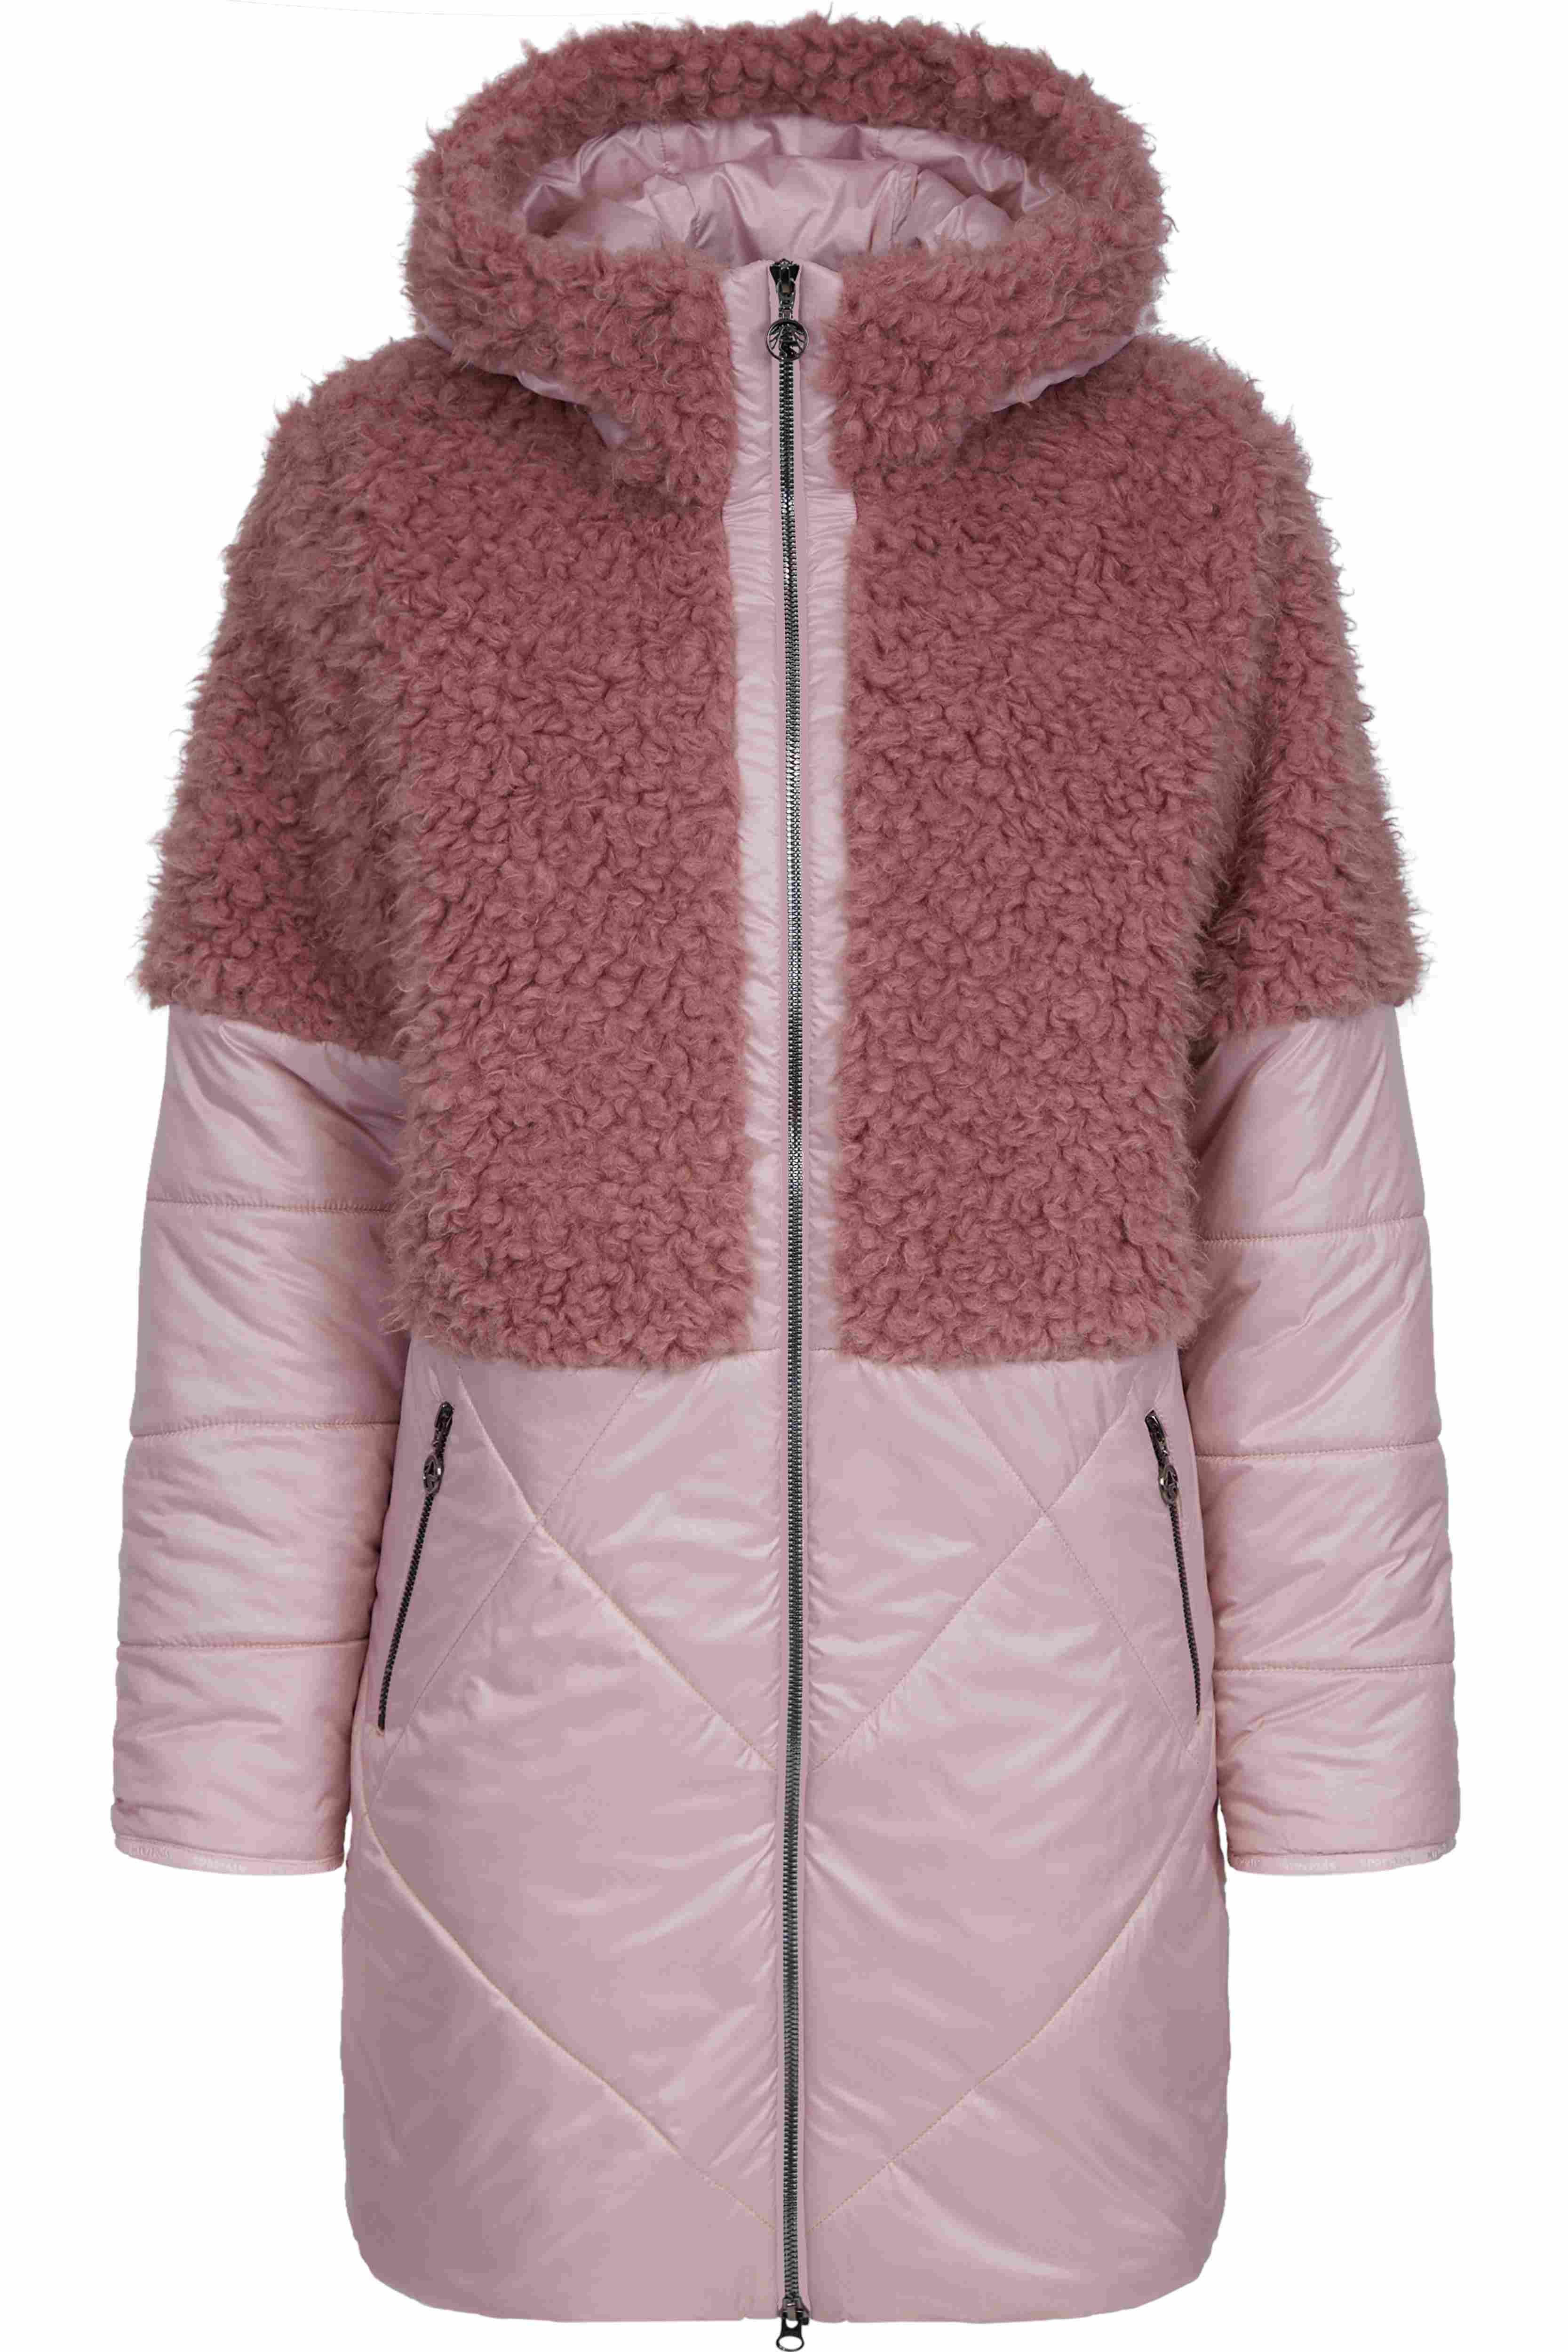 Sportalm kabát Rab m.K. dawn pink Velikost: 34